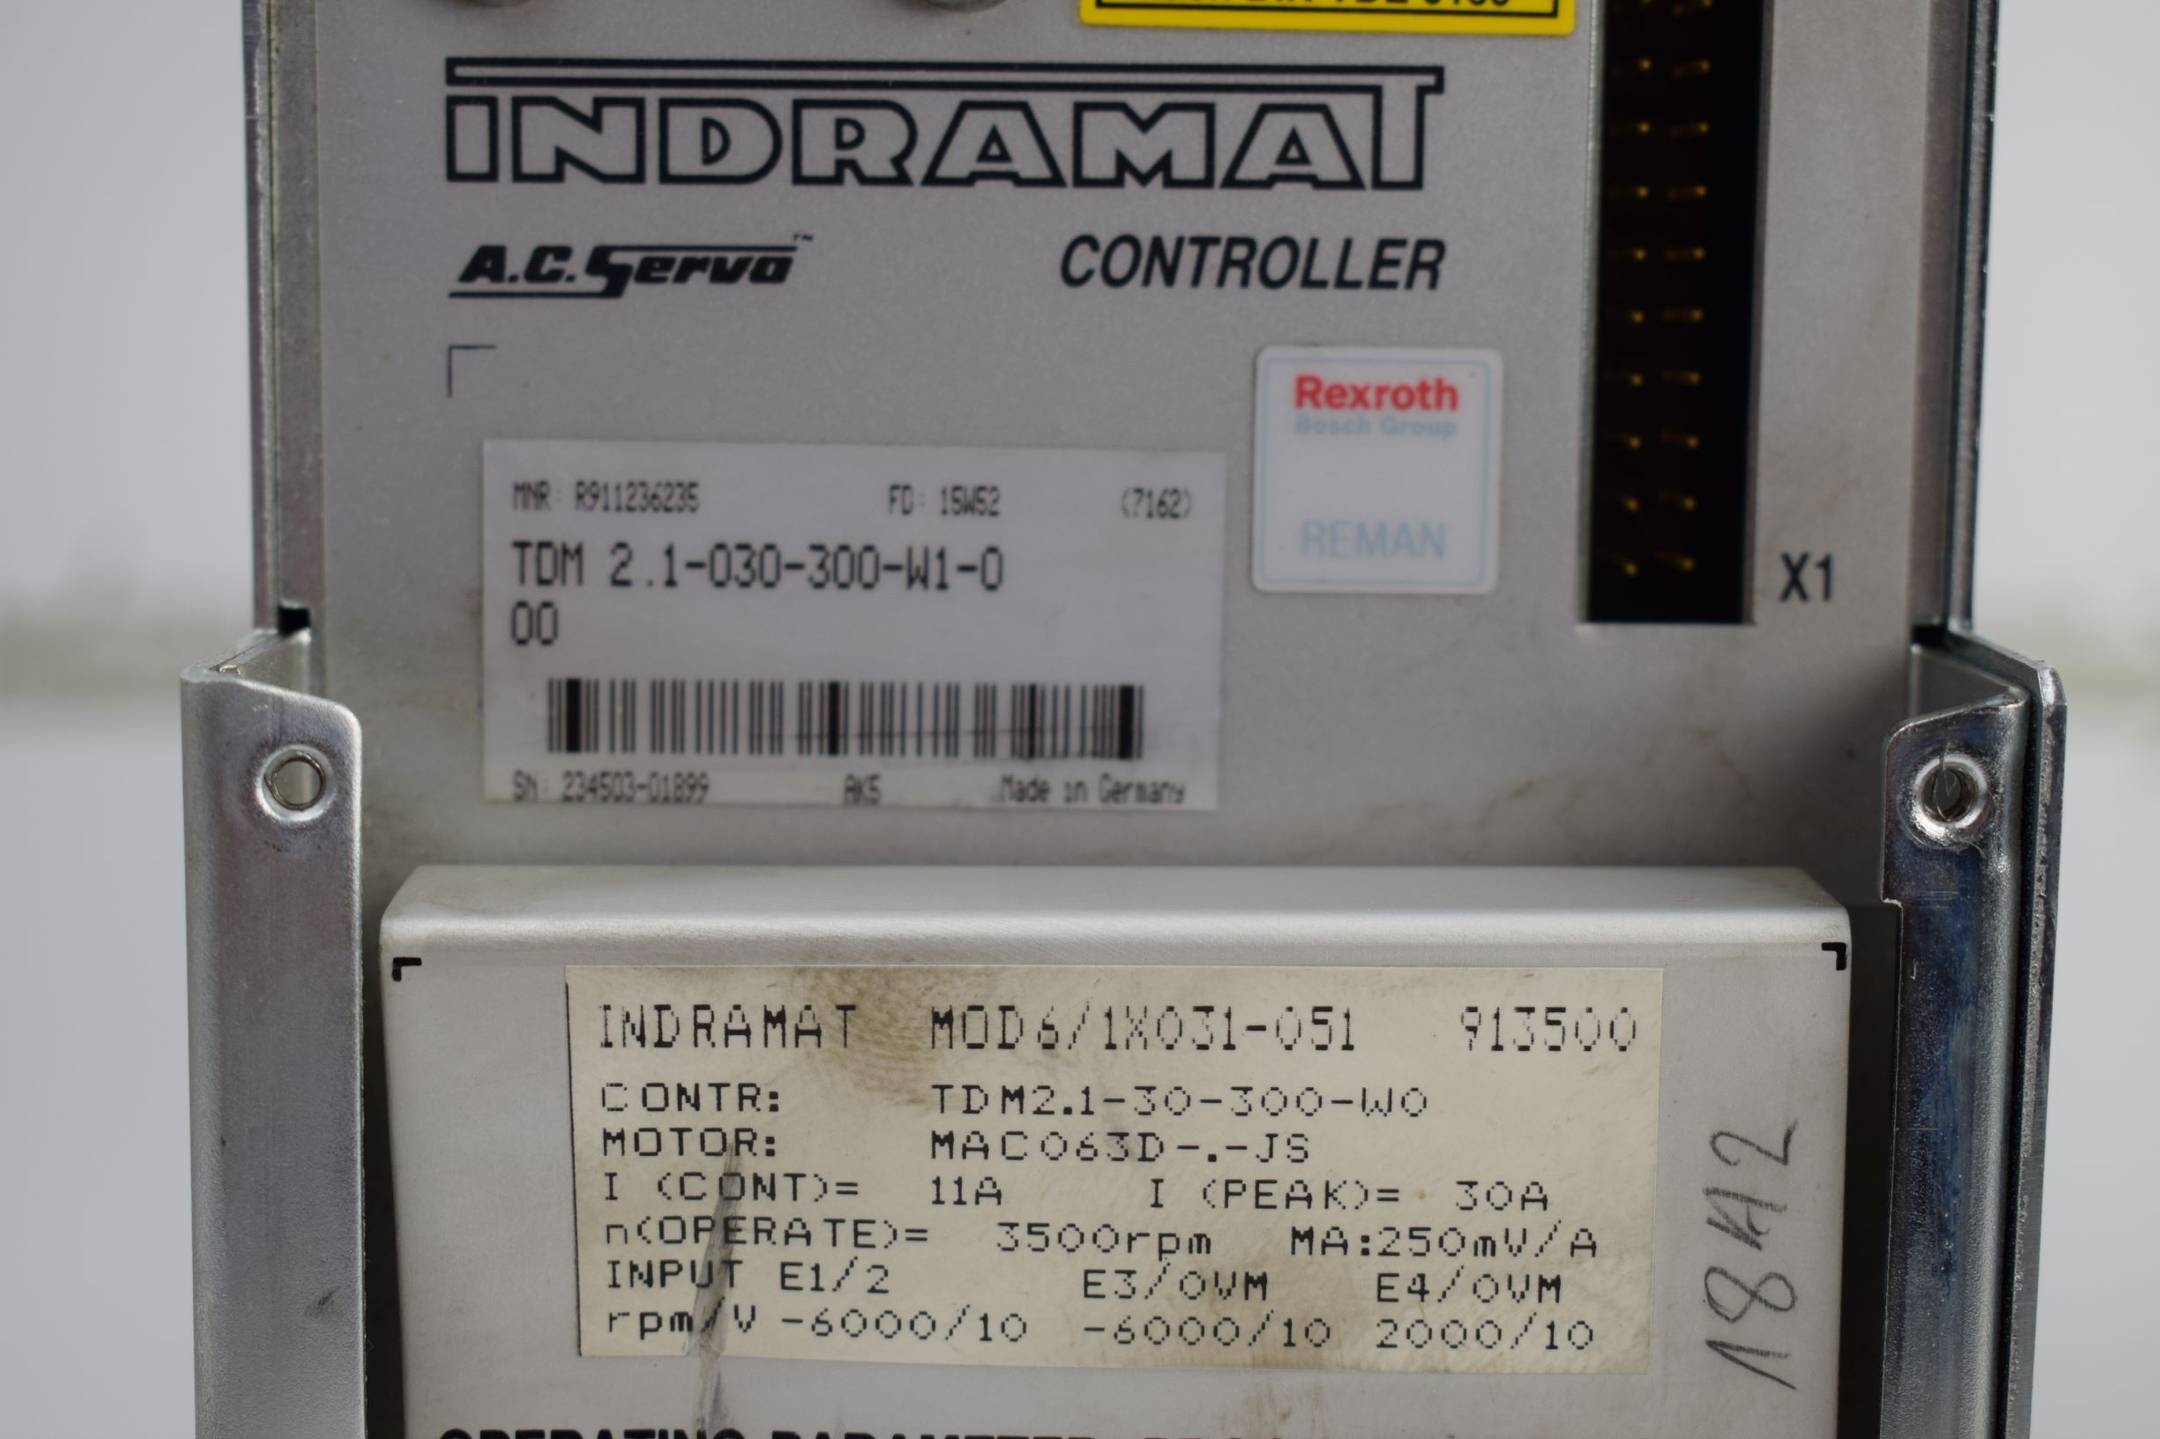 Indramat A.C. Servo TDM 2.1-030-300-W1-0 inkl. MOD6/1X031-051